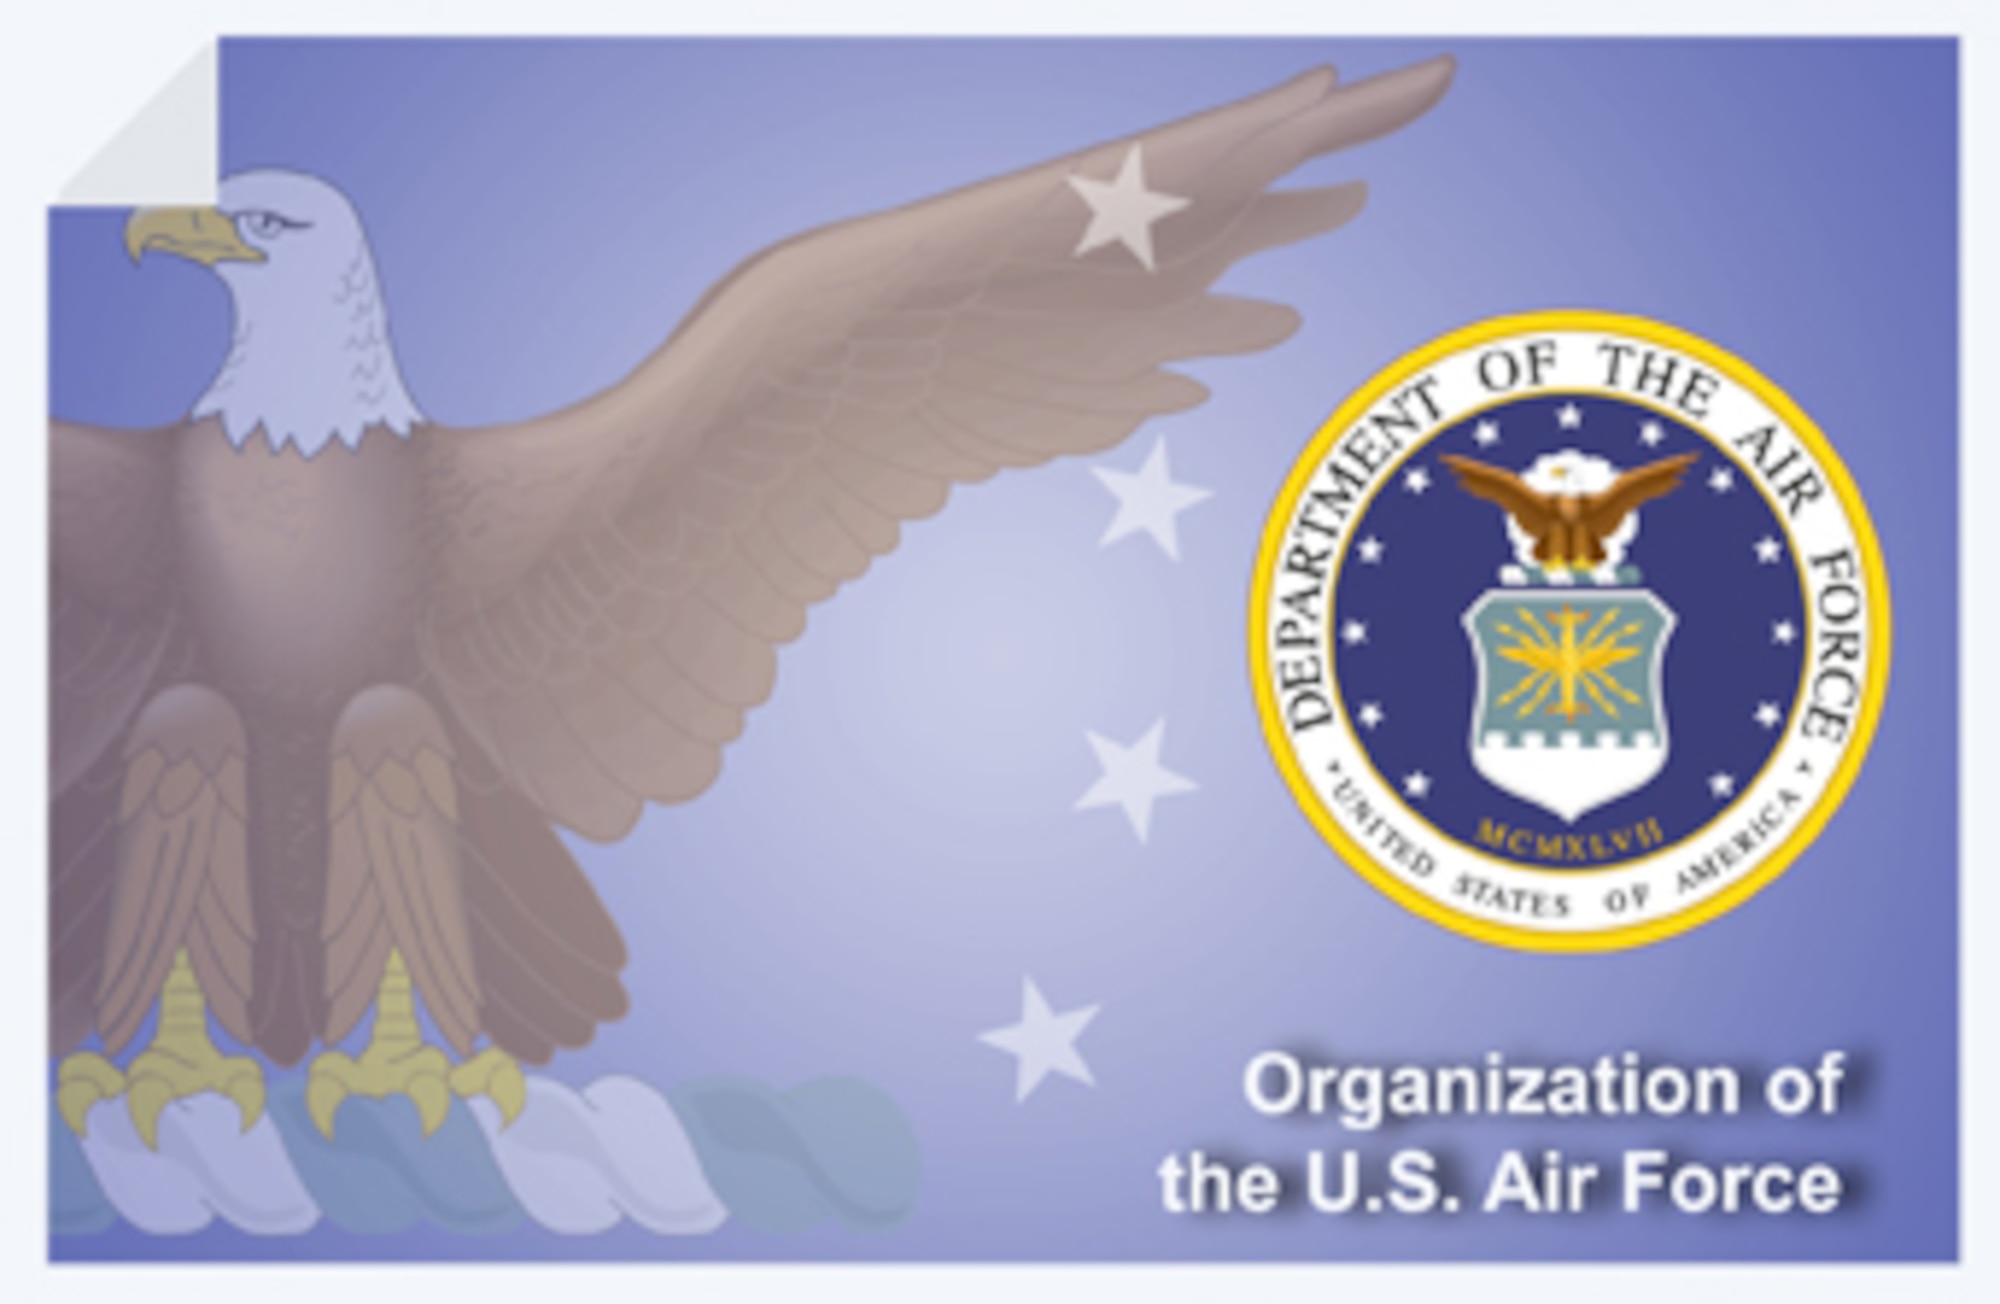 The U.S. Air Force > Air Force > Fact Sheet Display